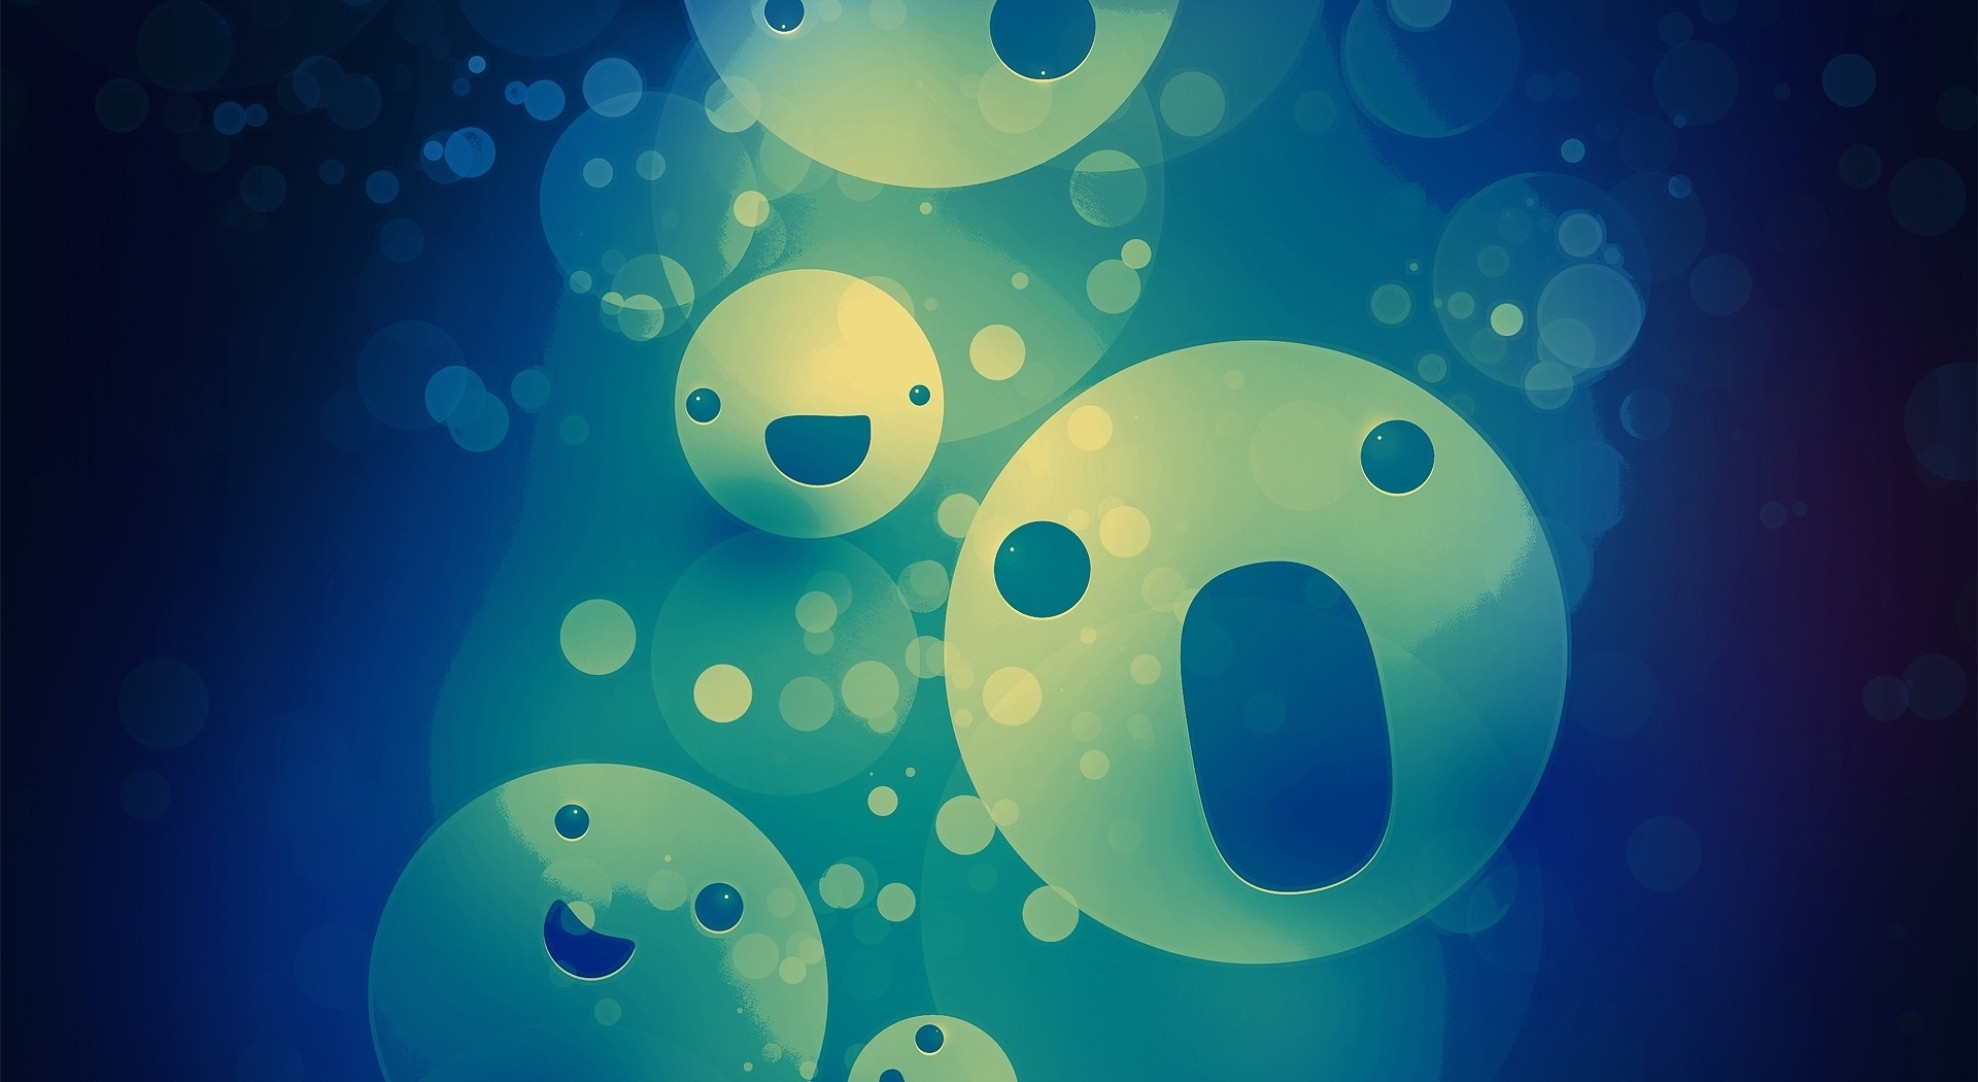 Wallpaper iPhone iPod Galaxy Emojis by HeySweetBieber on DeviantArt